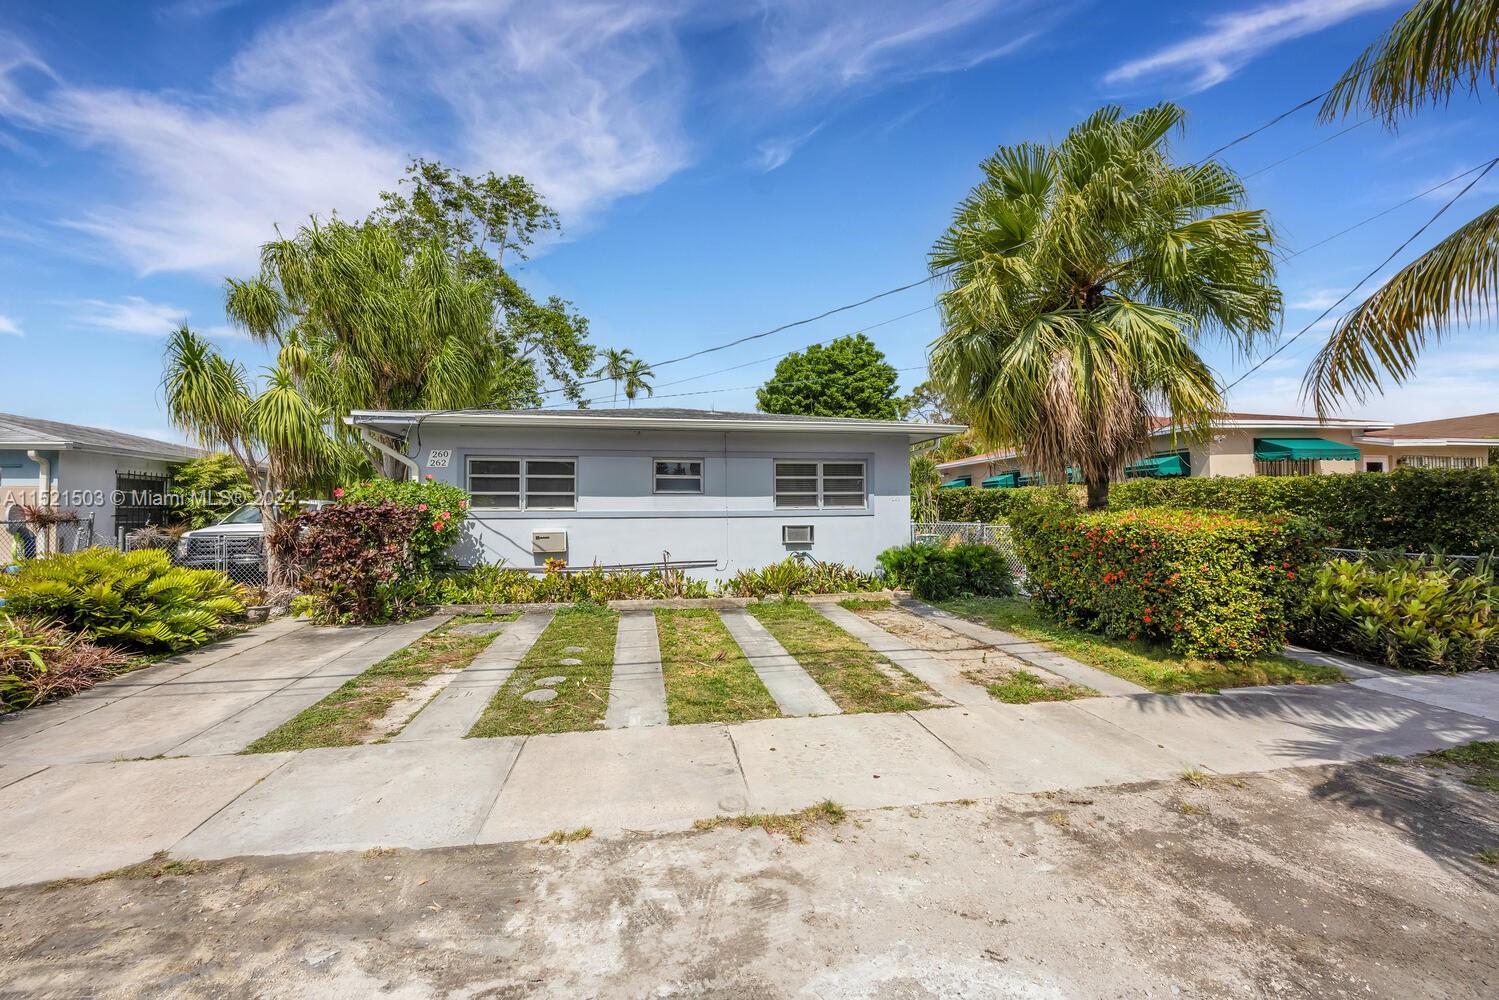 Rental Property at 260 Sw 31st Ct Ct, Miami, Broward County, Florida -  - $990,000 MO.